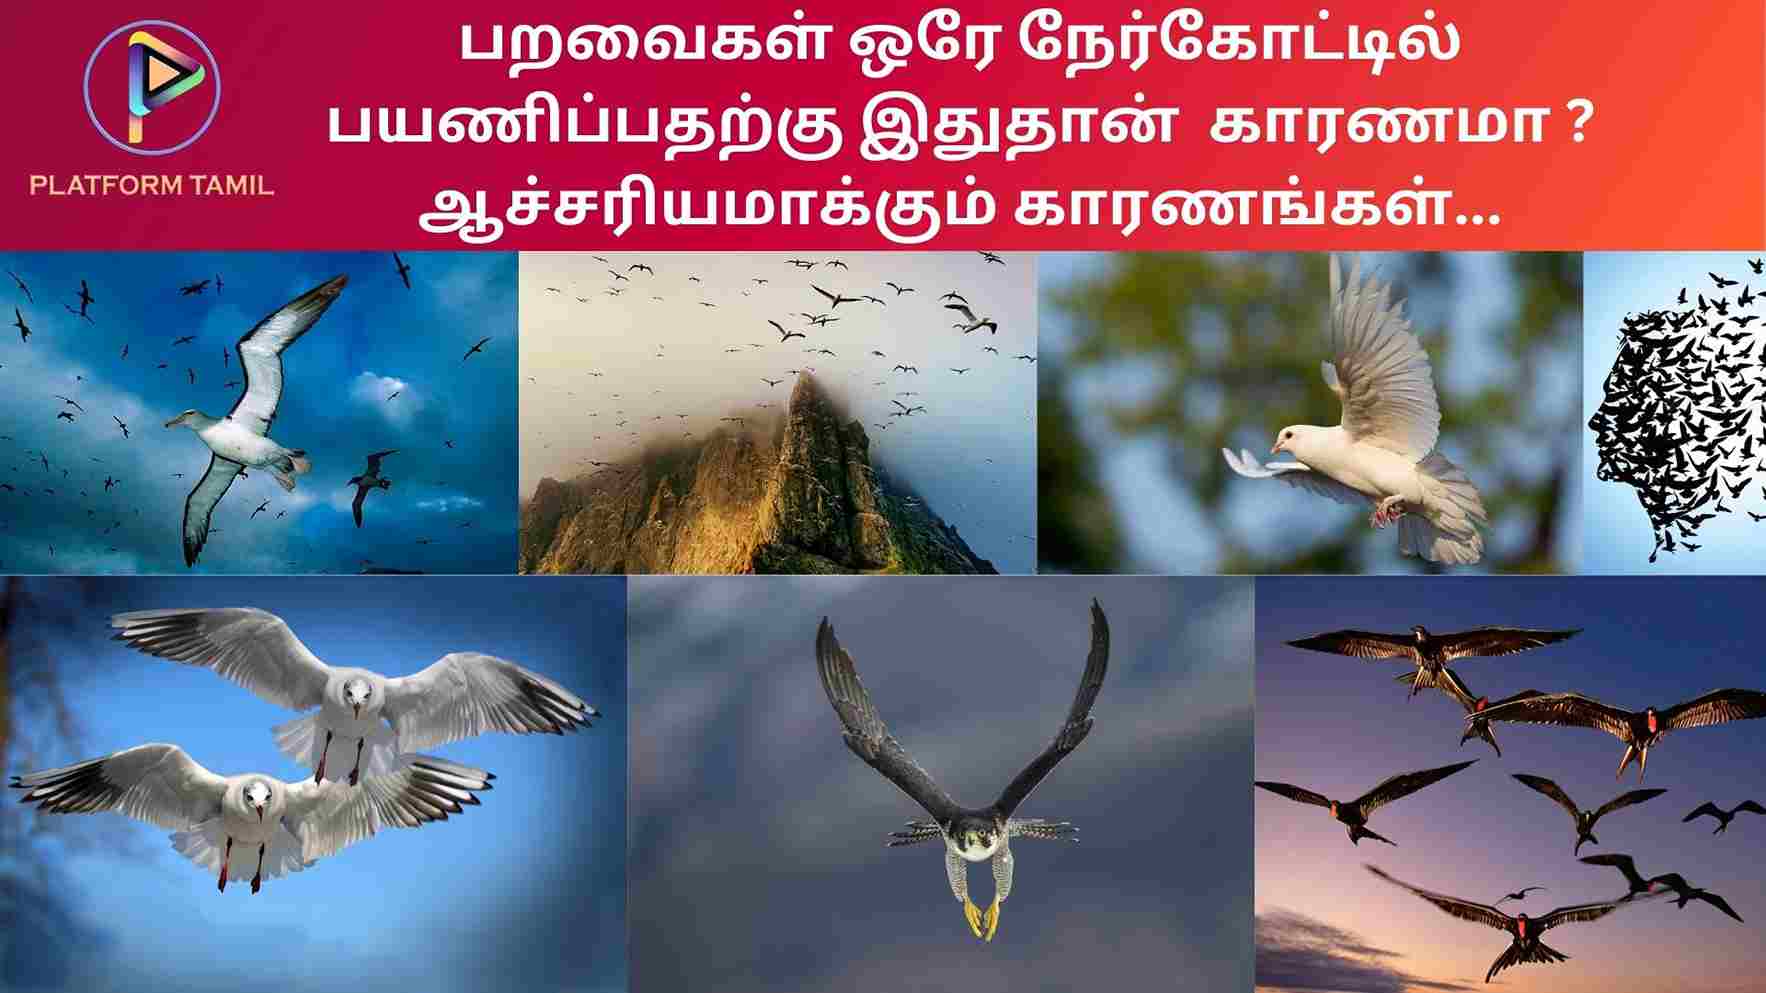 Birds Flying in the Sky - Platform Tamil